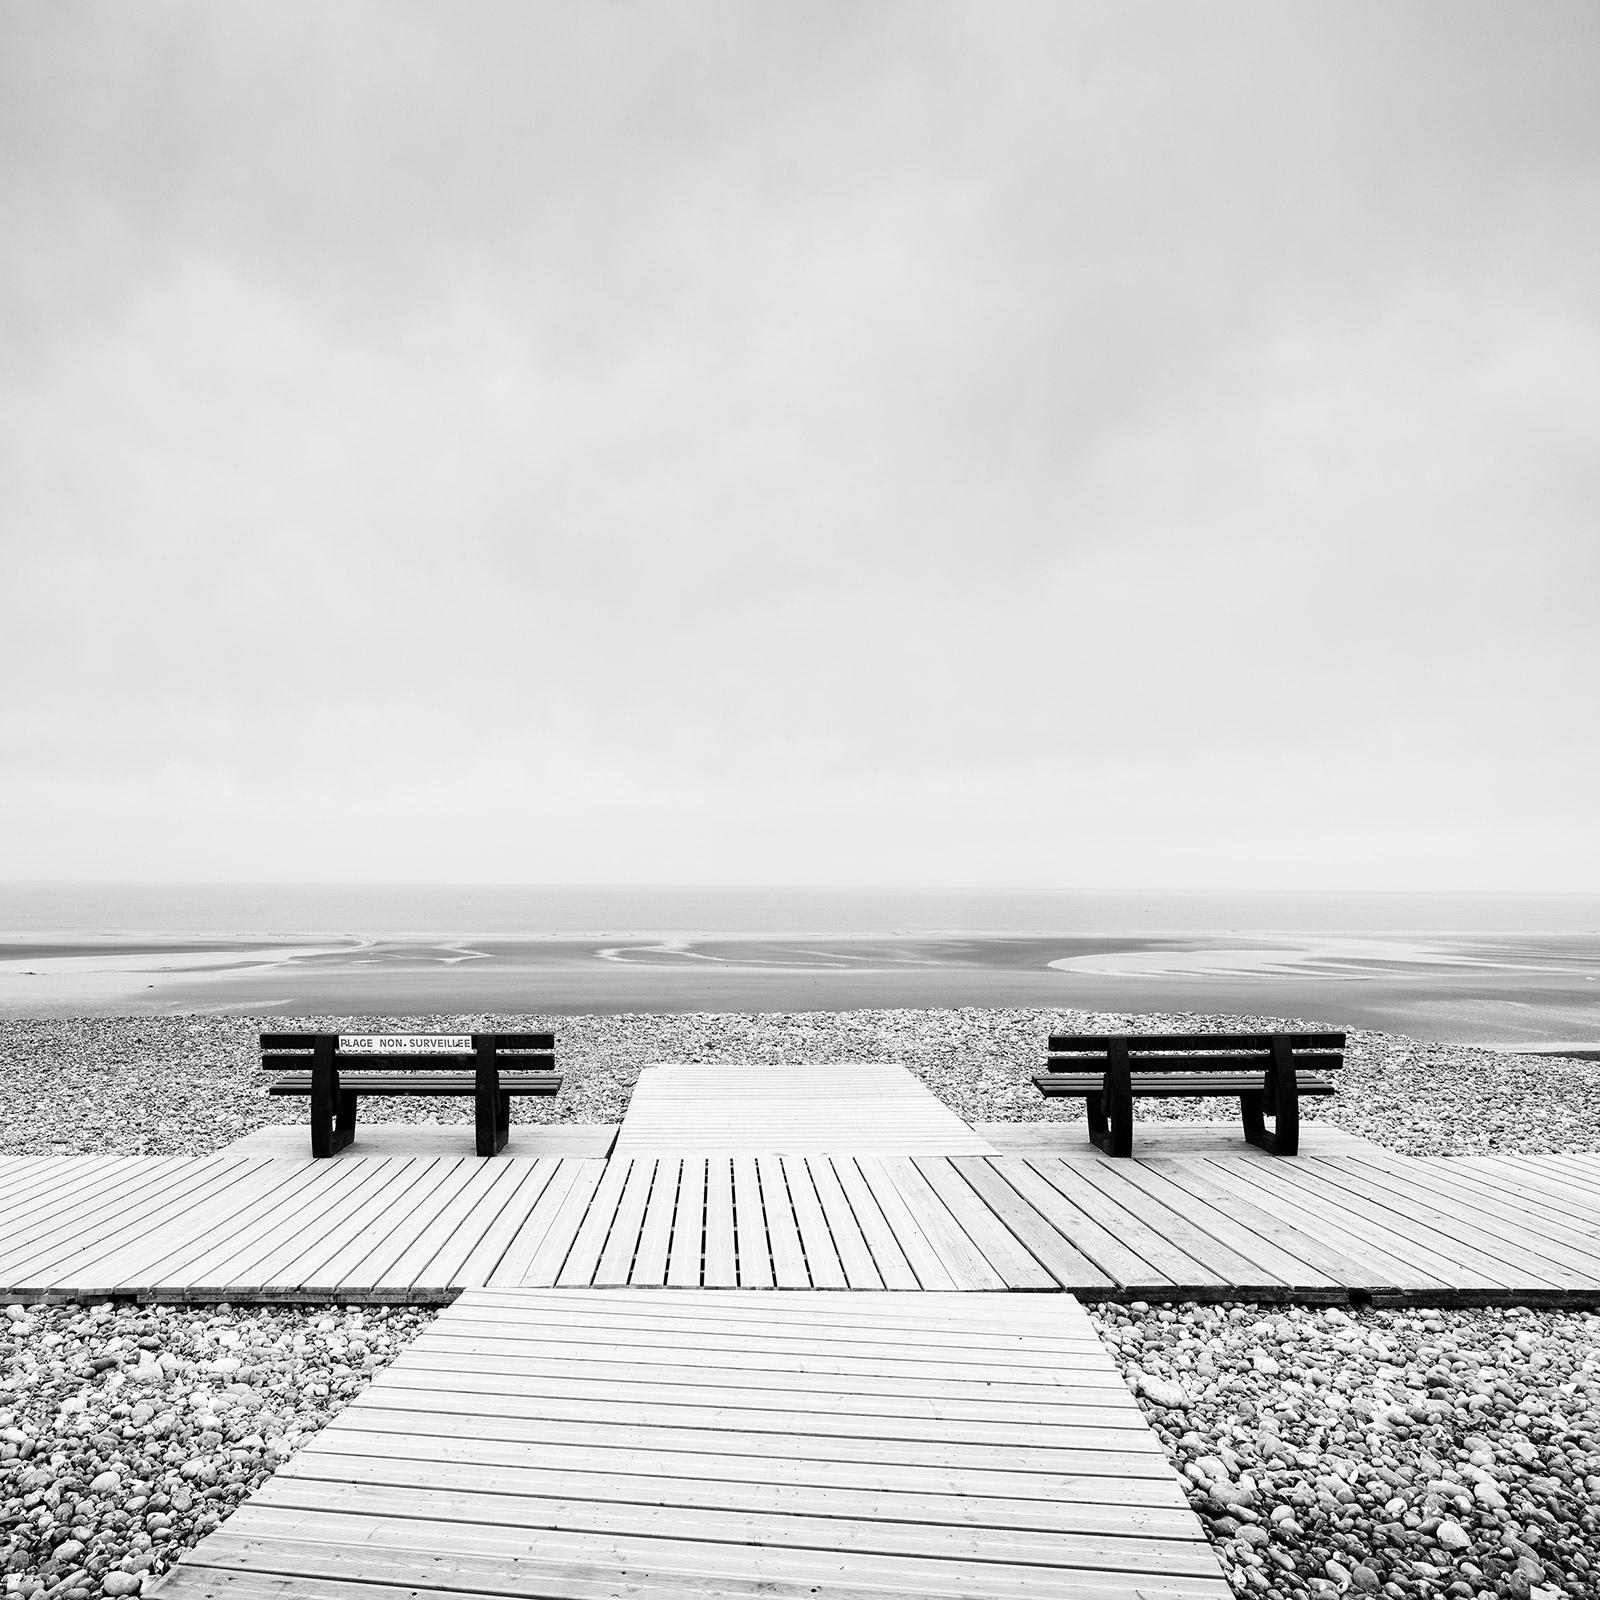 This Place to Linger, benchs, deserted beach, black white fine art landscape print